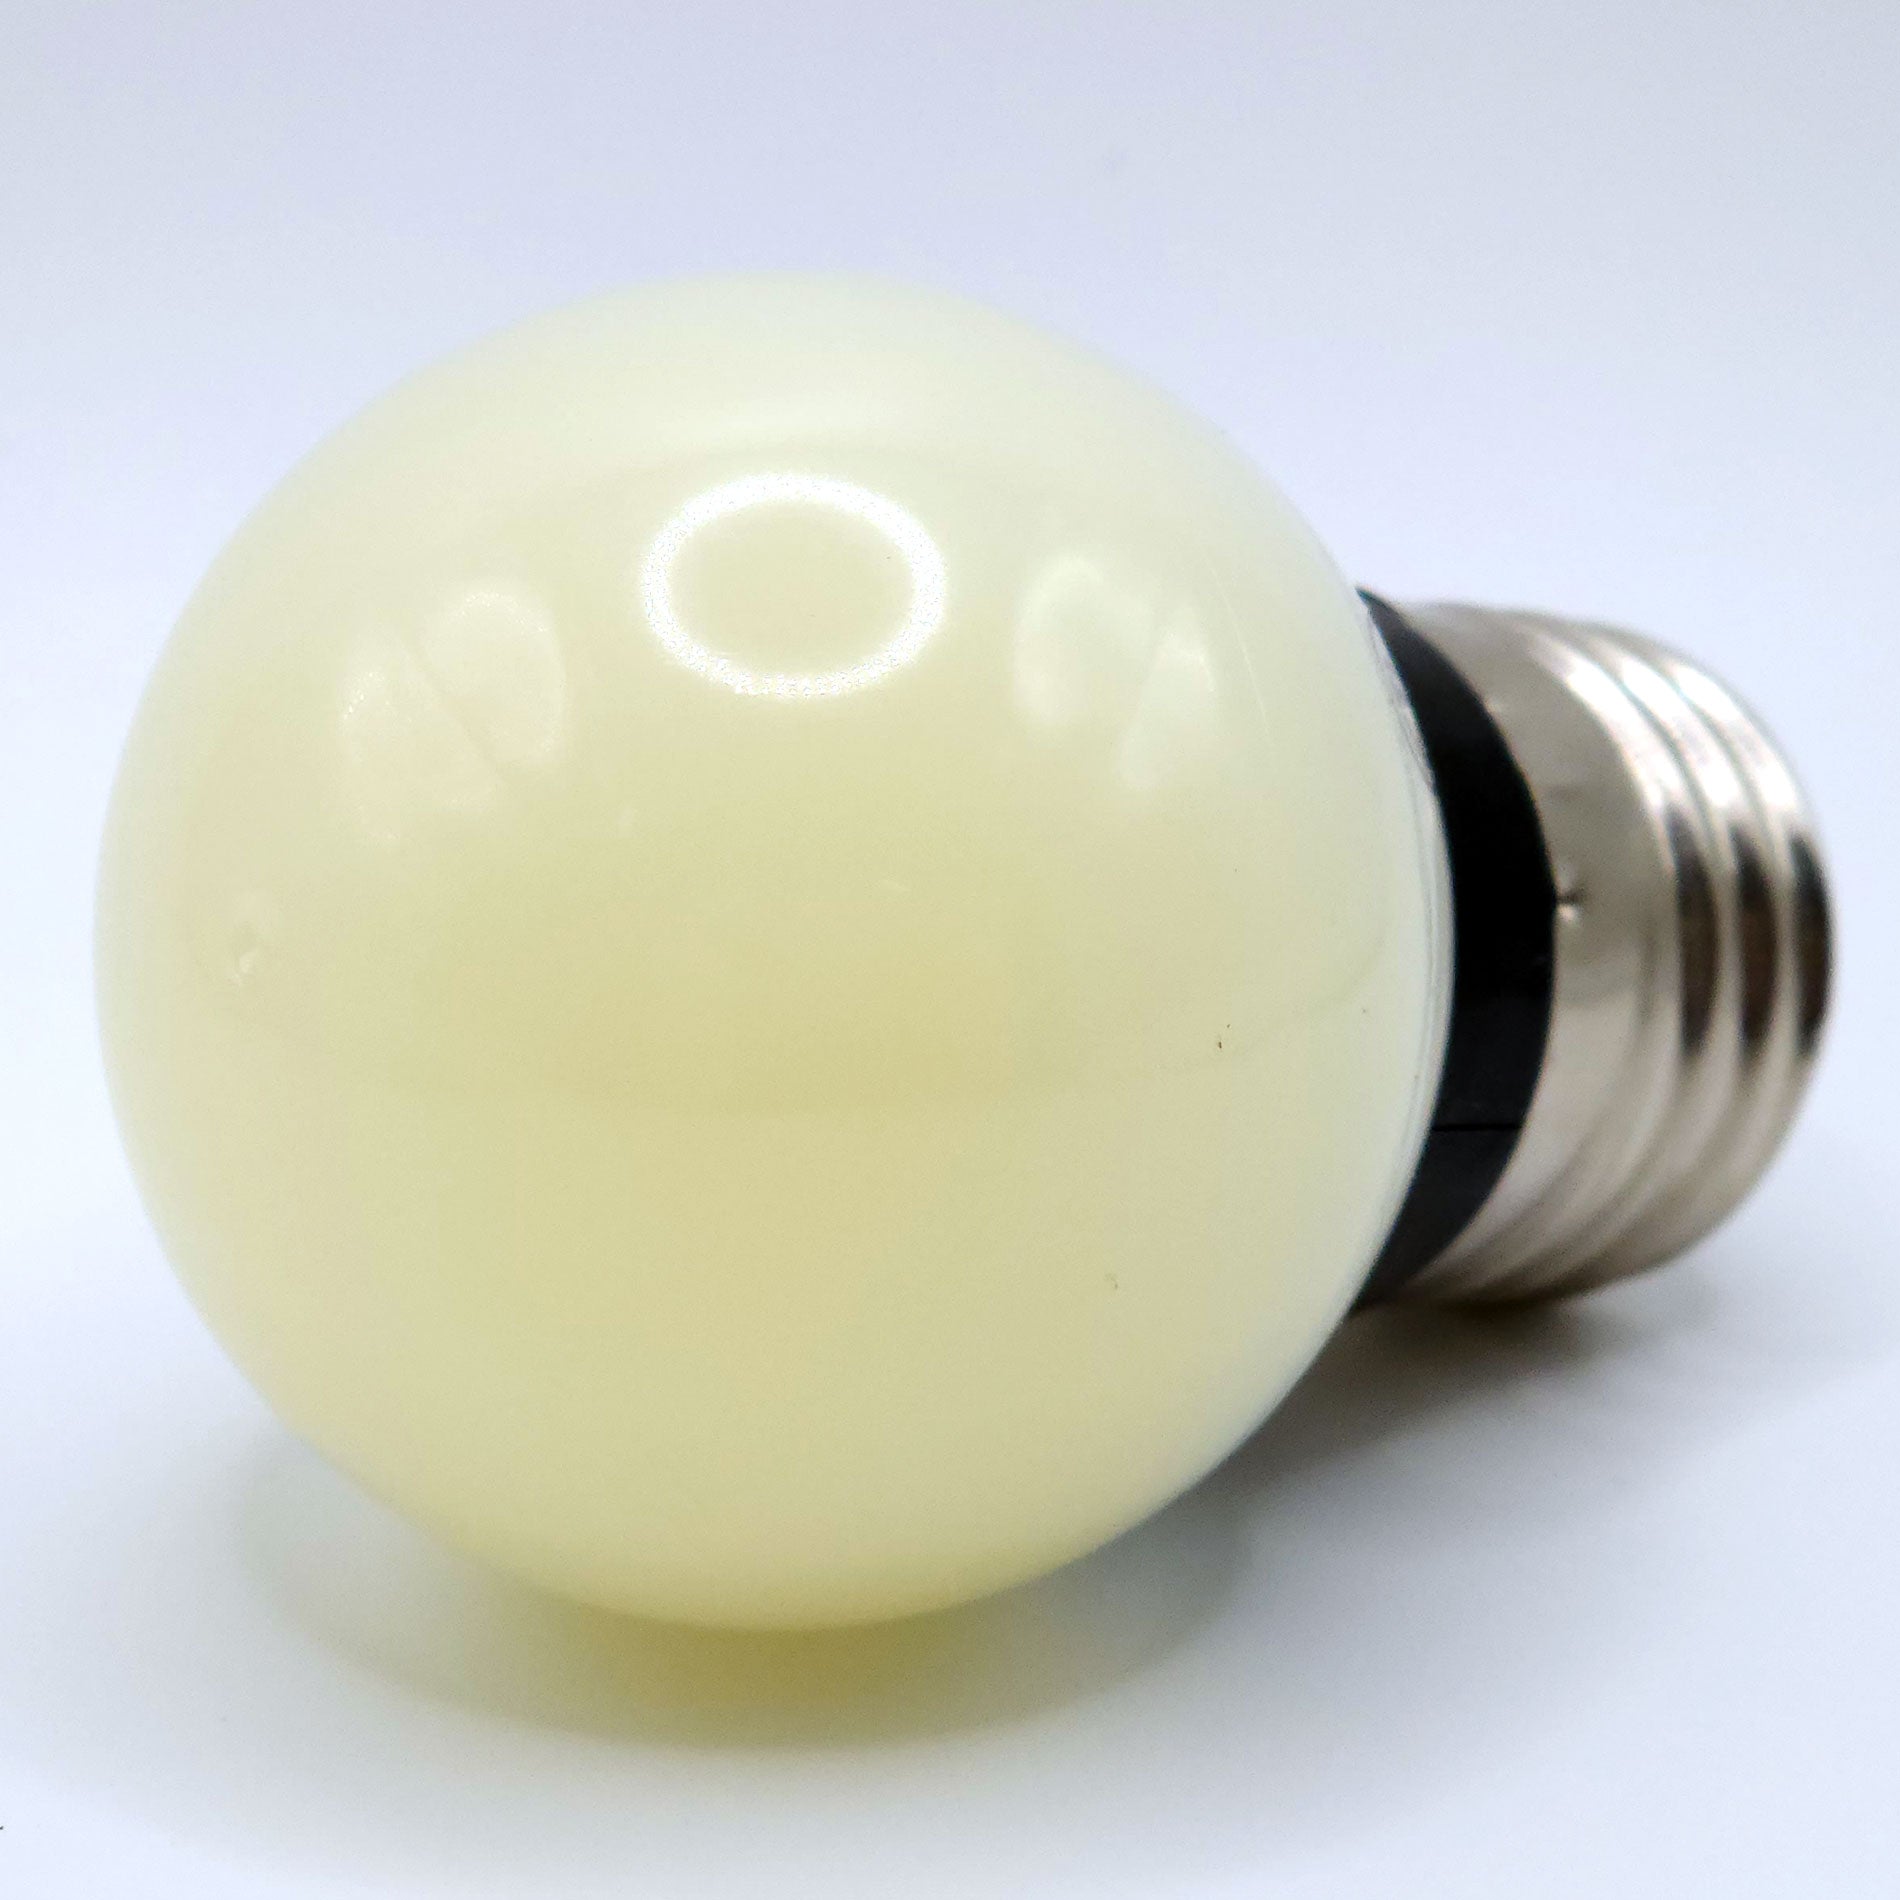 Globe 25-Watt Equivalent BMIIc G15 E26 LED Light Bulb